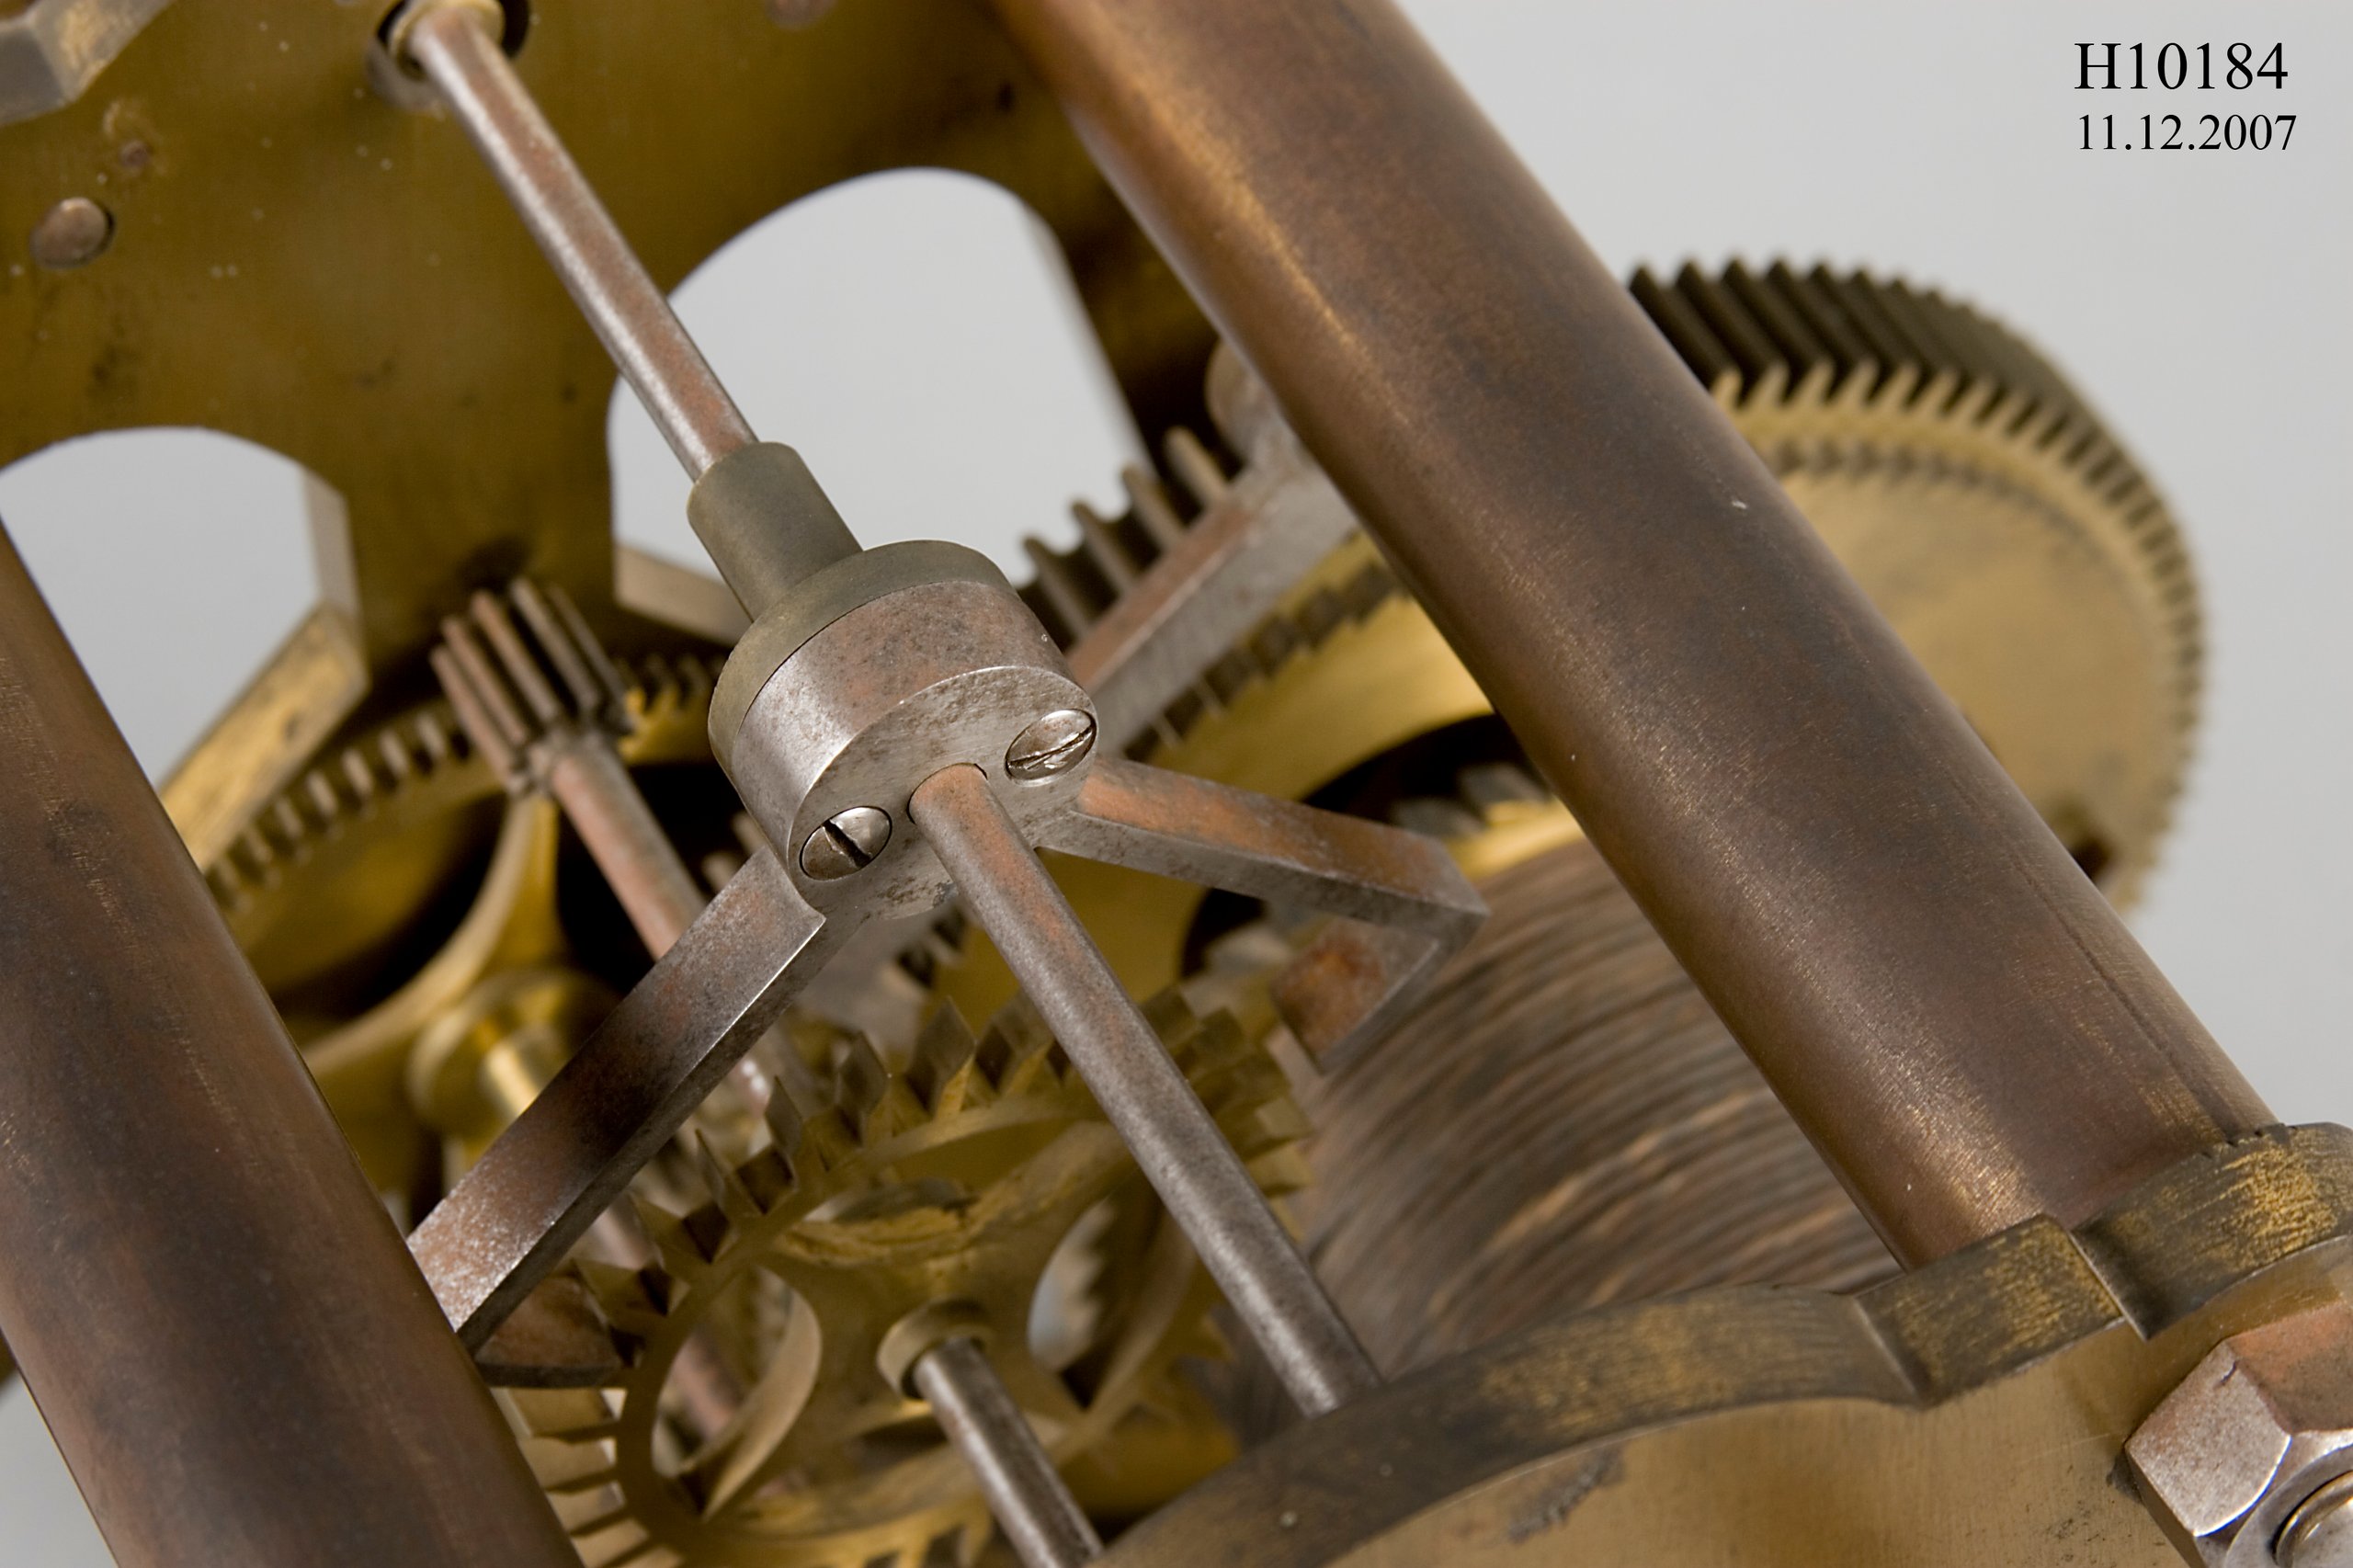 Turret clock drive used at Sydney Observatory